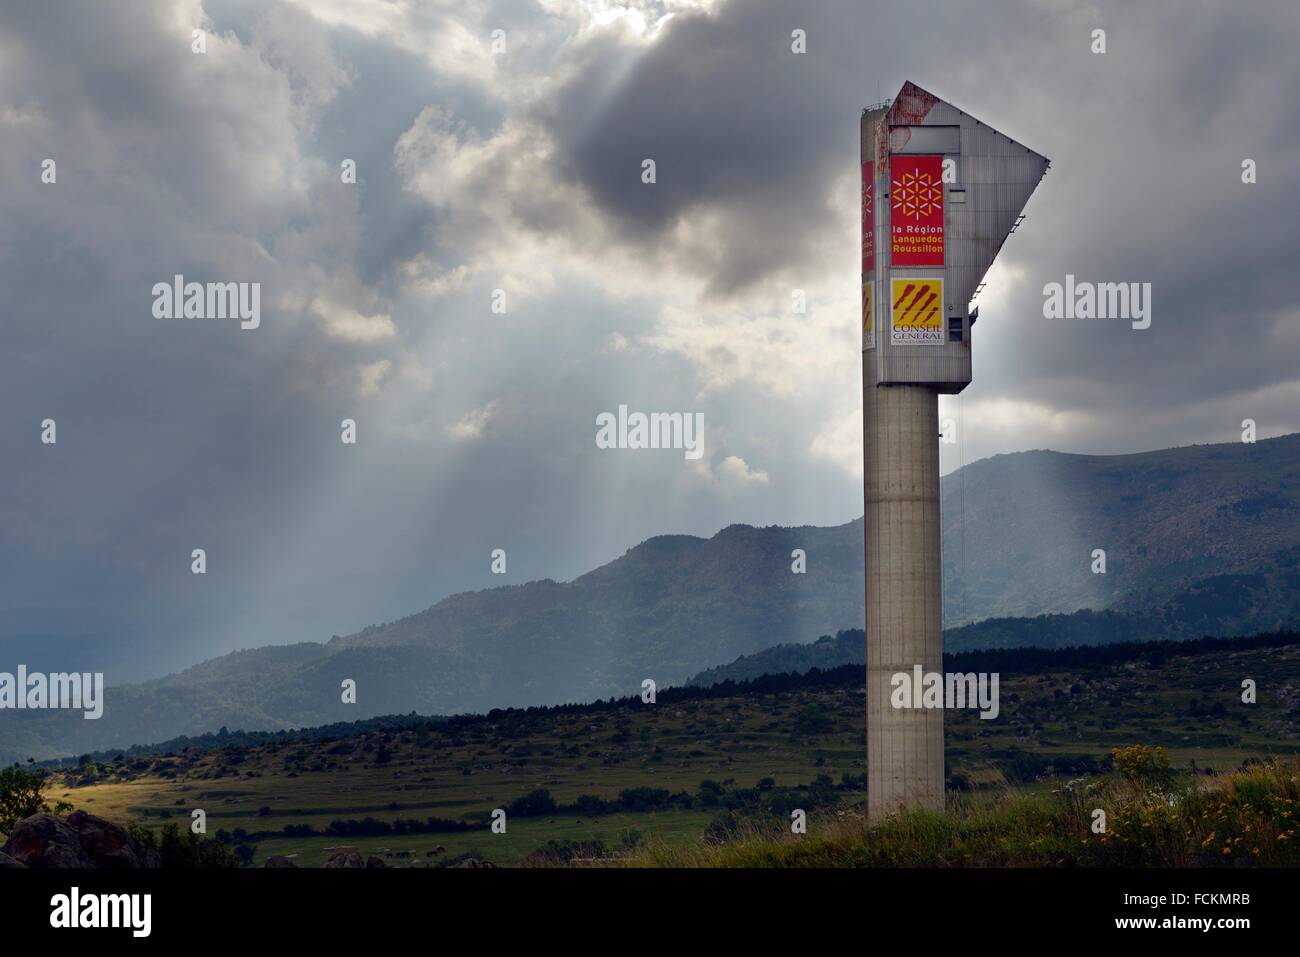 Themis solar power plant. Research and development centre. Targassonne, Pyrénées-Orientales, France, Europe. Stock Photo